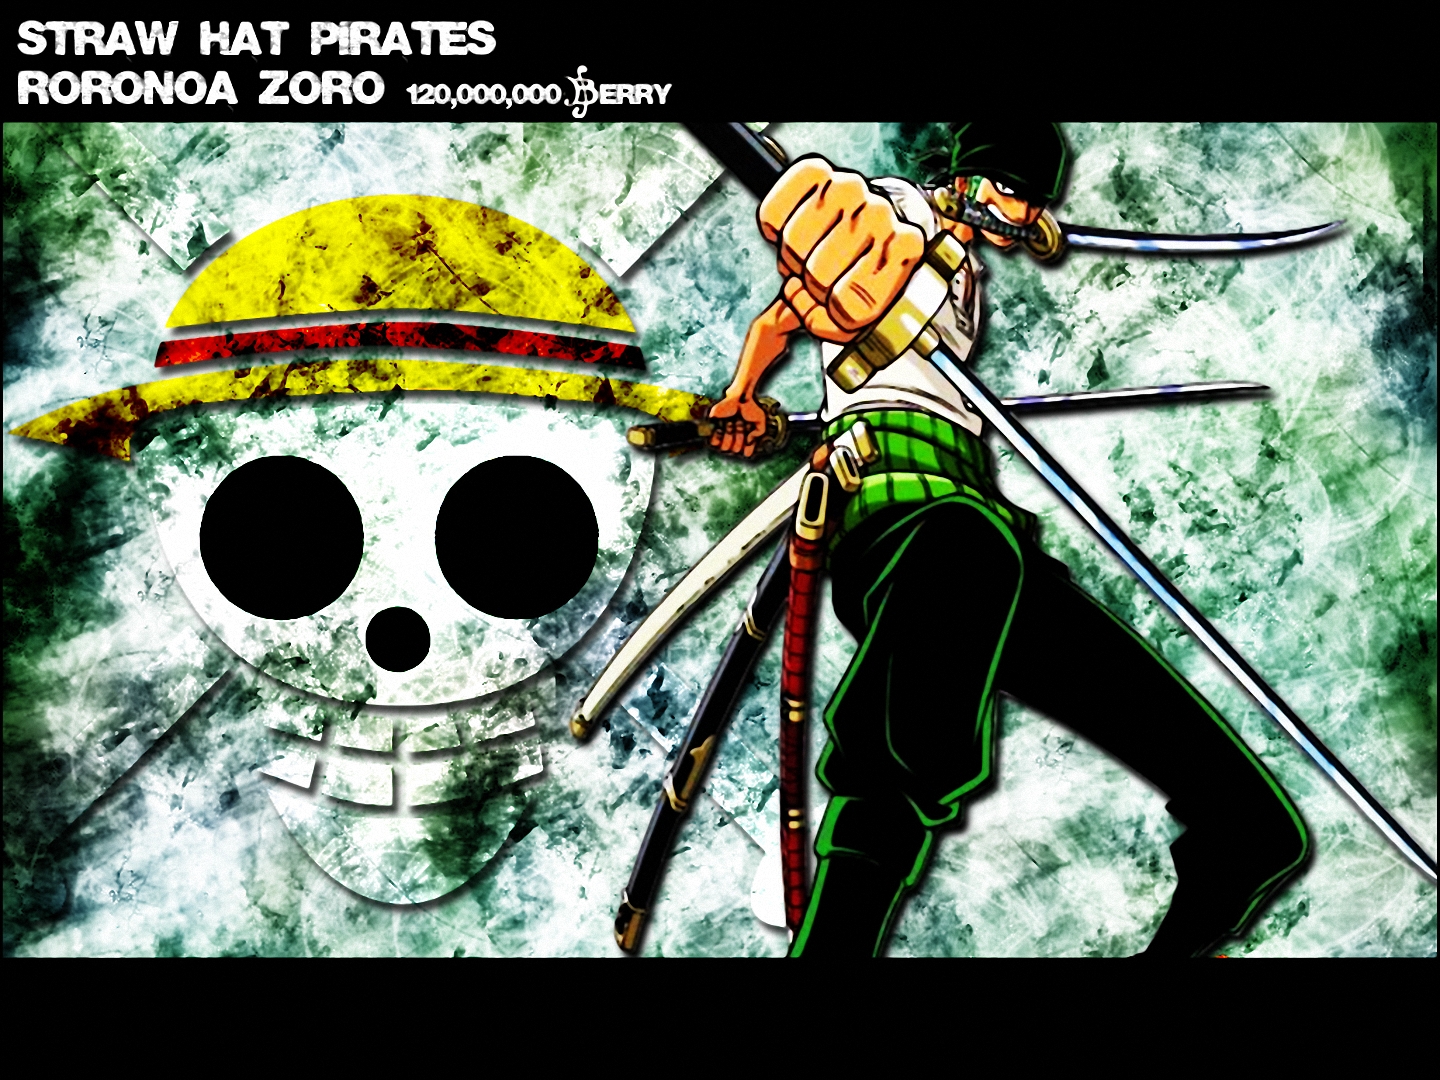 Roronoa Zoro wielding Santoryu (One Piece) as a desktop wallpaper.